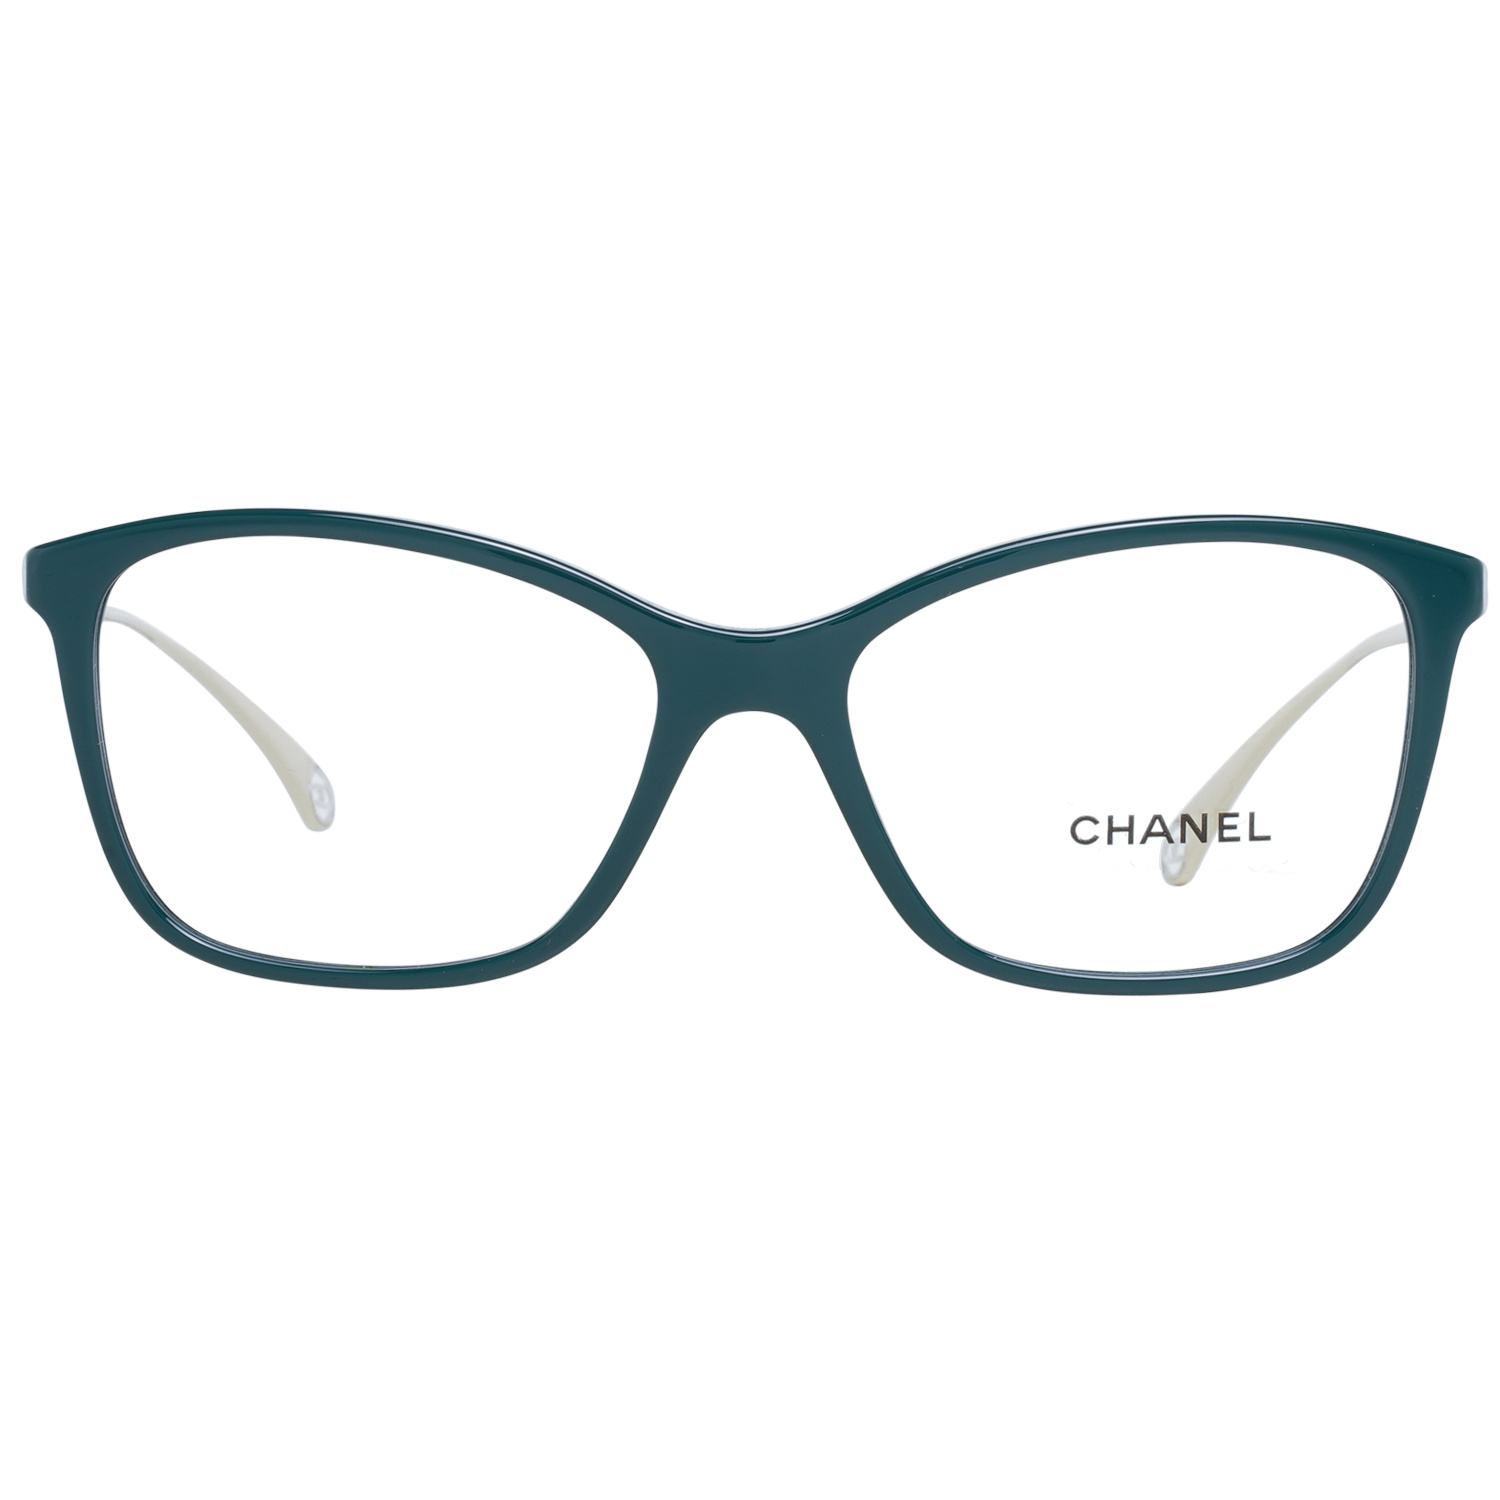 chanel glasses frames